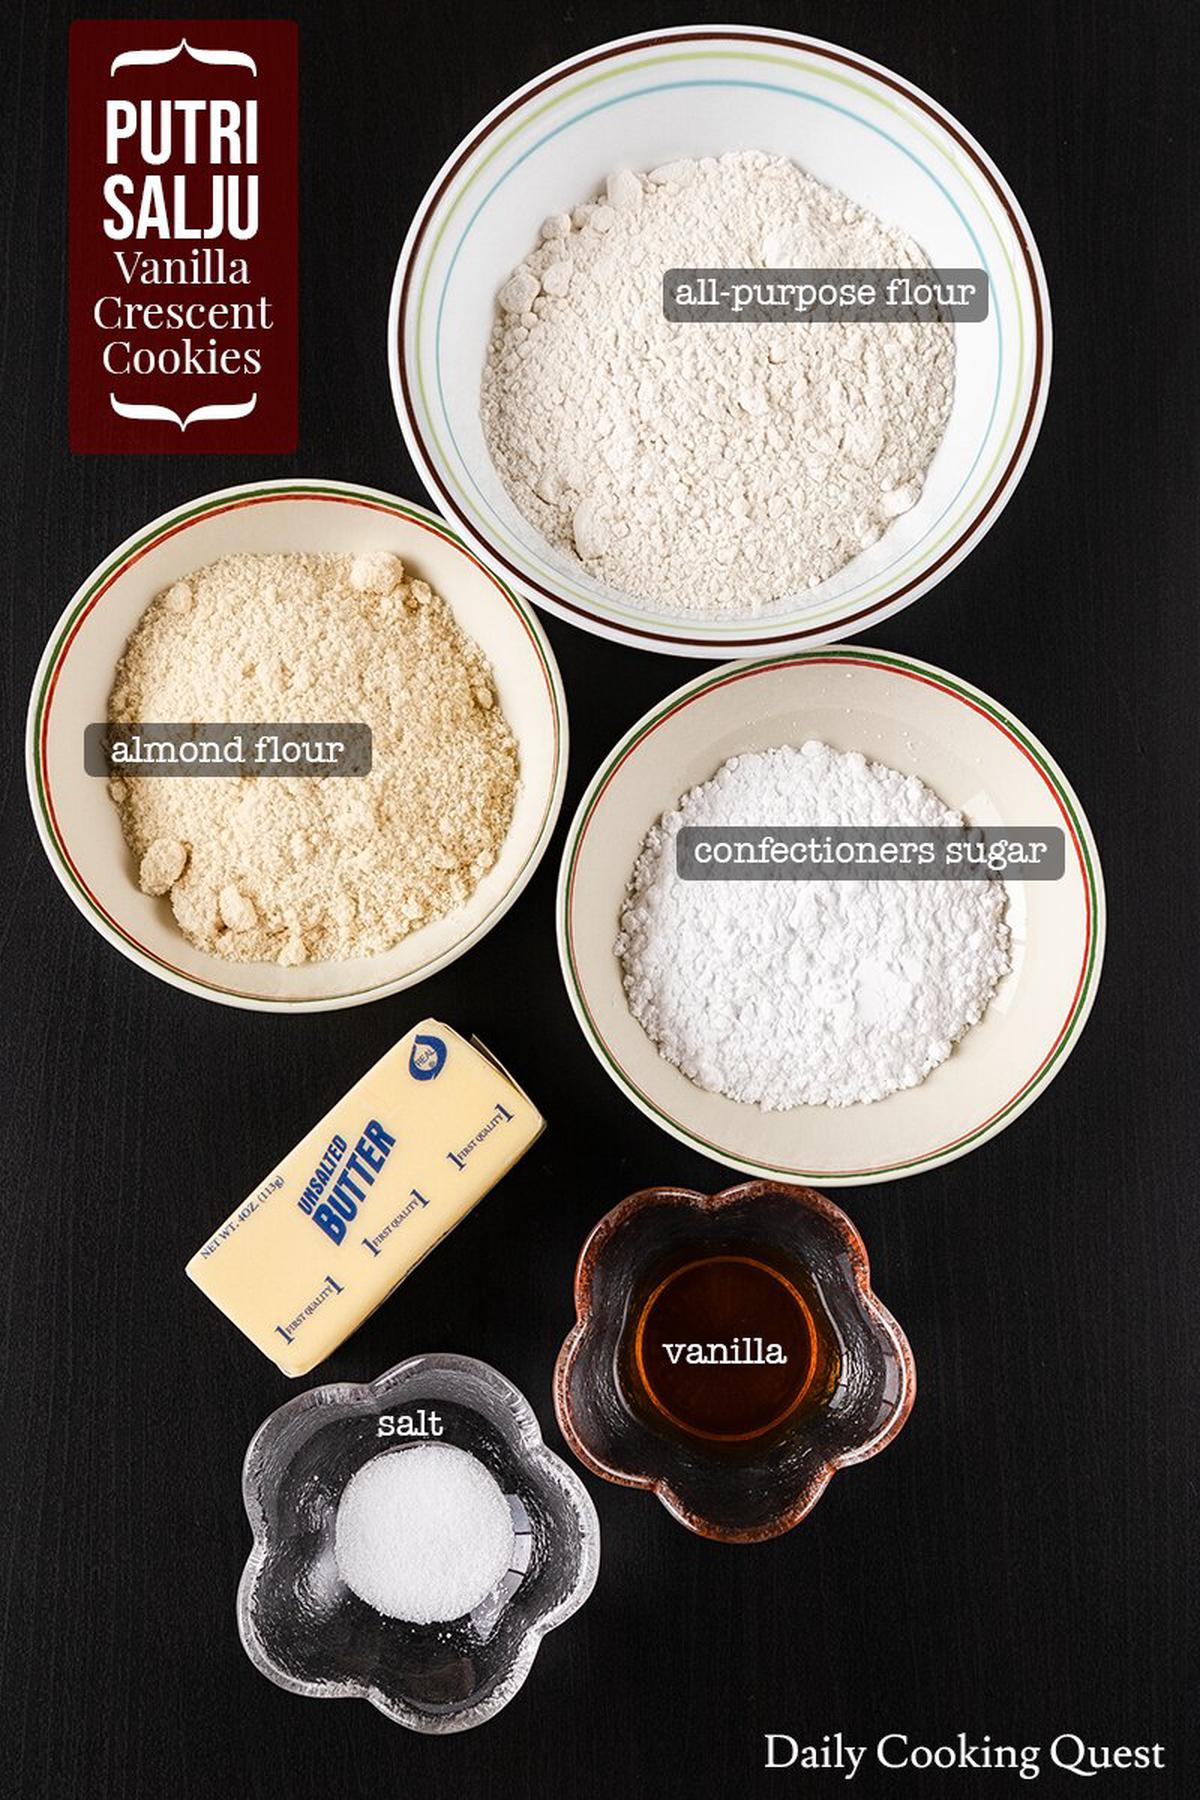 Ingredients for putri salju (vanilla crescent cookies): all-purpose flour, almond flour, confectioners sugar, unsalted butter, vanilla, and salt.